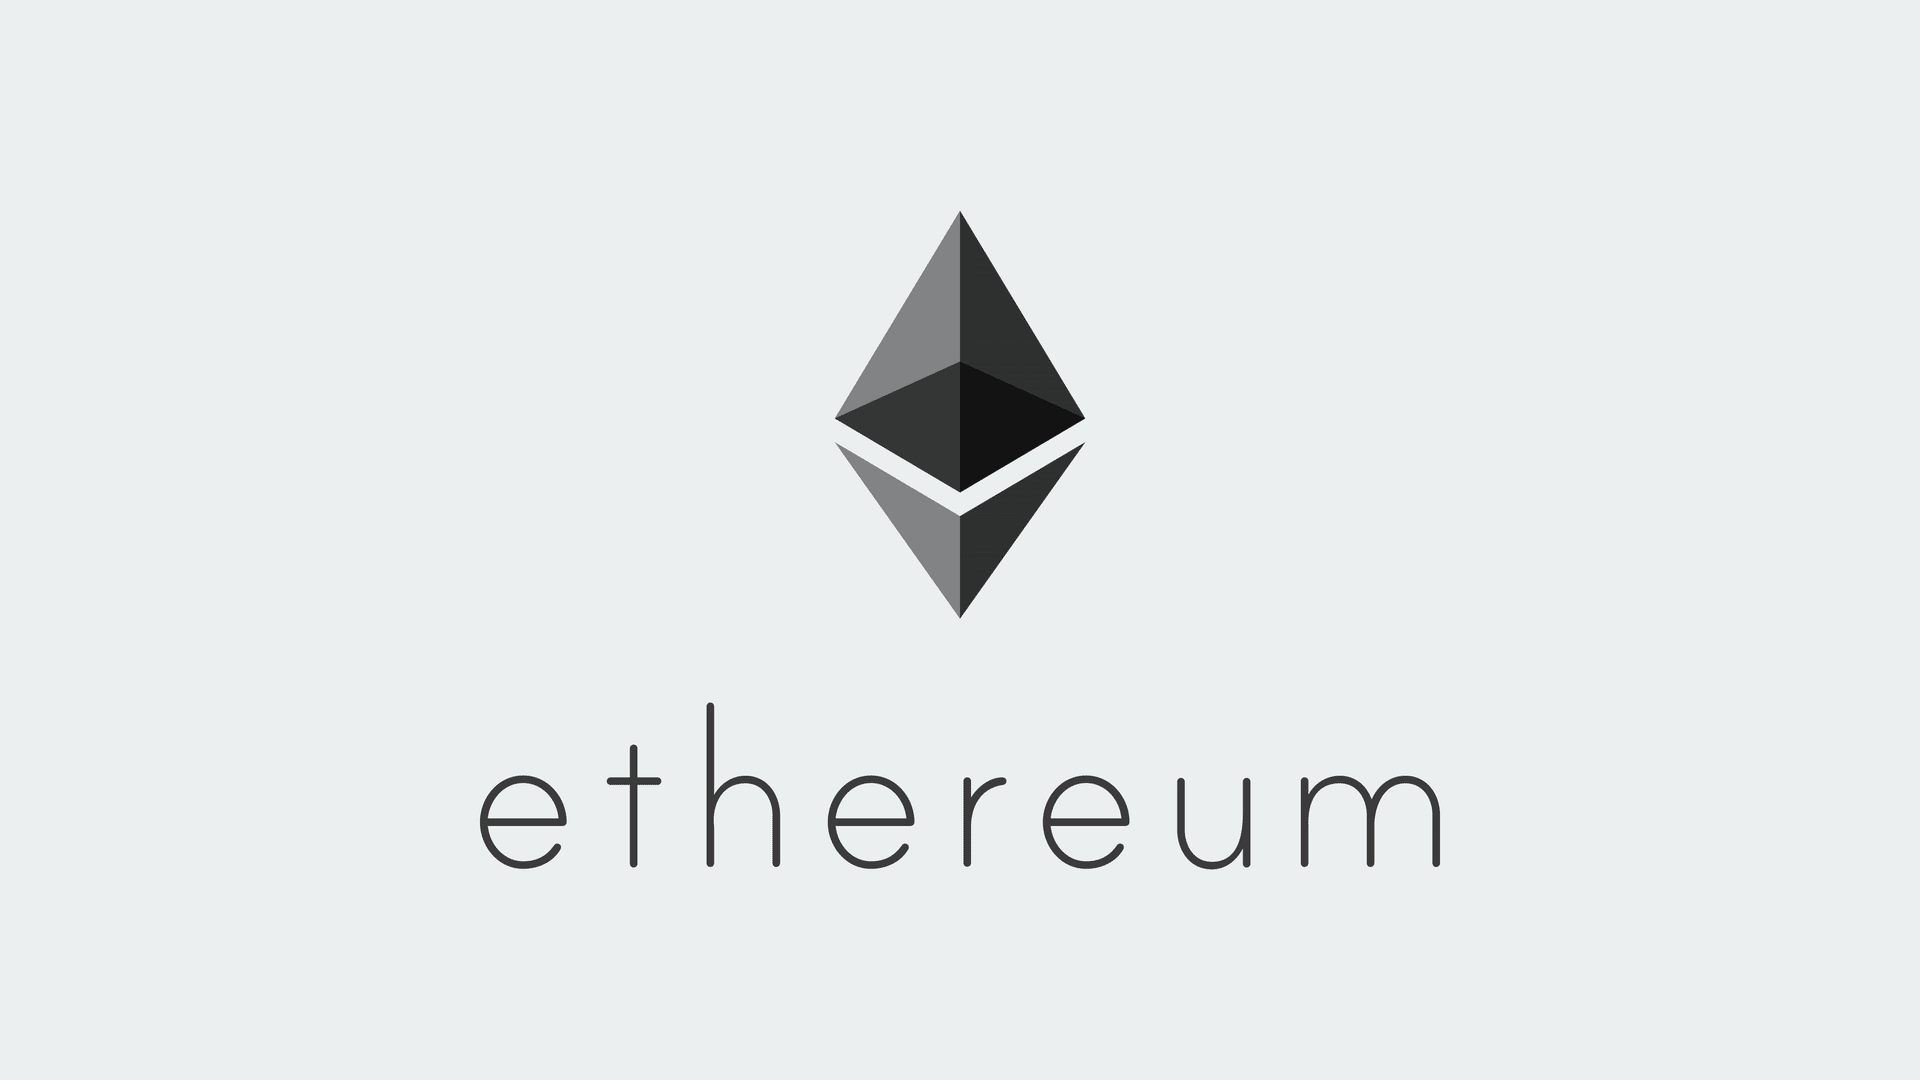 Ethereum brand assets | ethereum.org